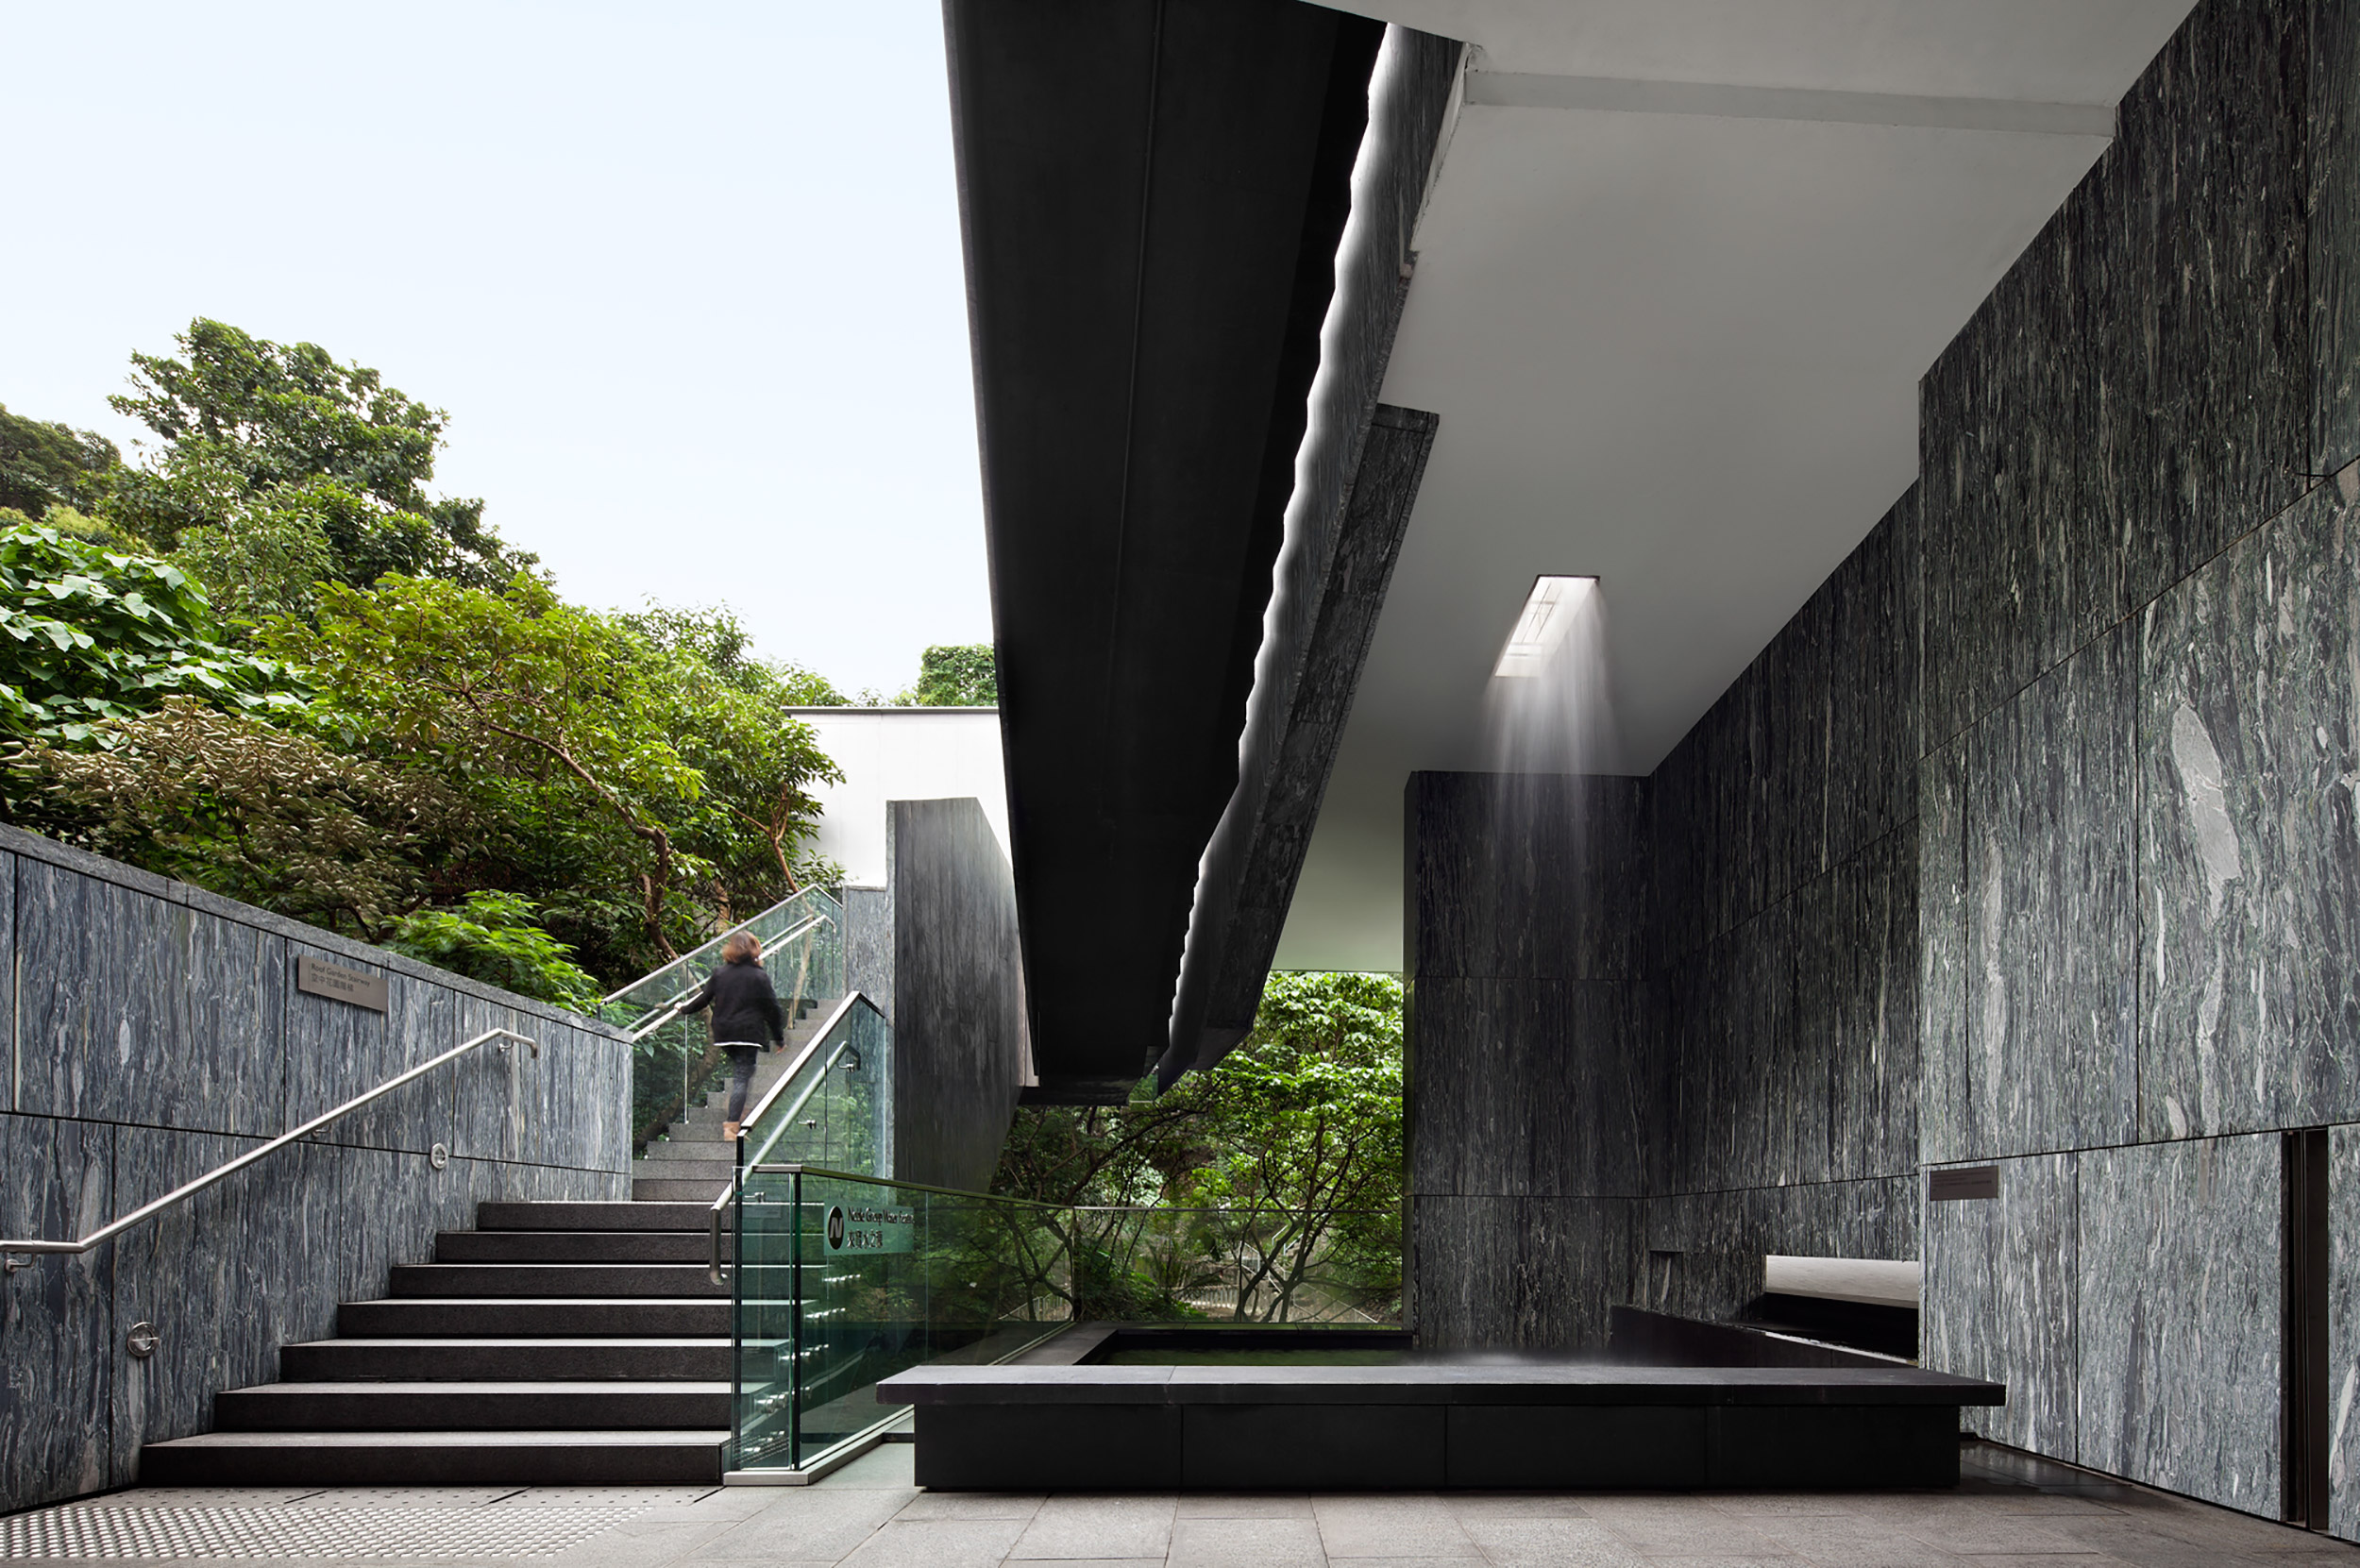 Project: Asia Society Hong Kong Center. Architect: Tod Williams Billie Tsien Architects | Partners. Photo: Michael Moran/OTTO.